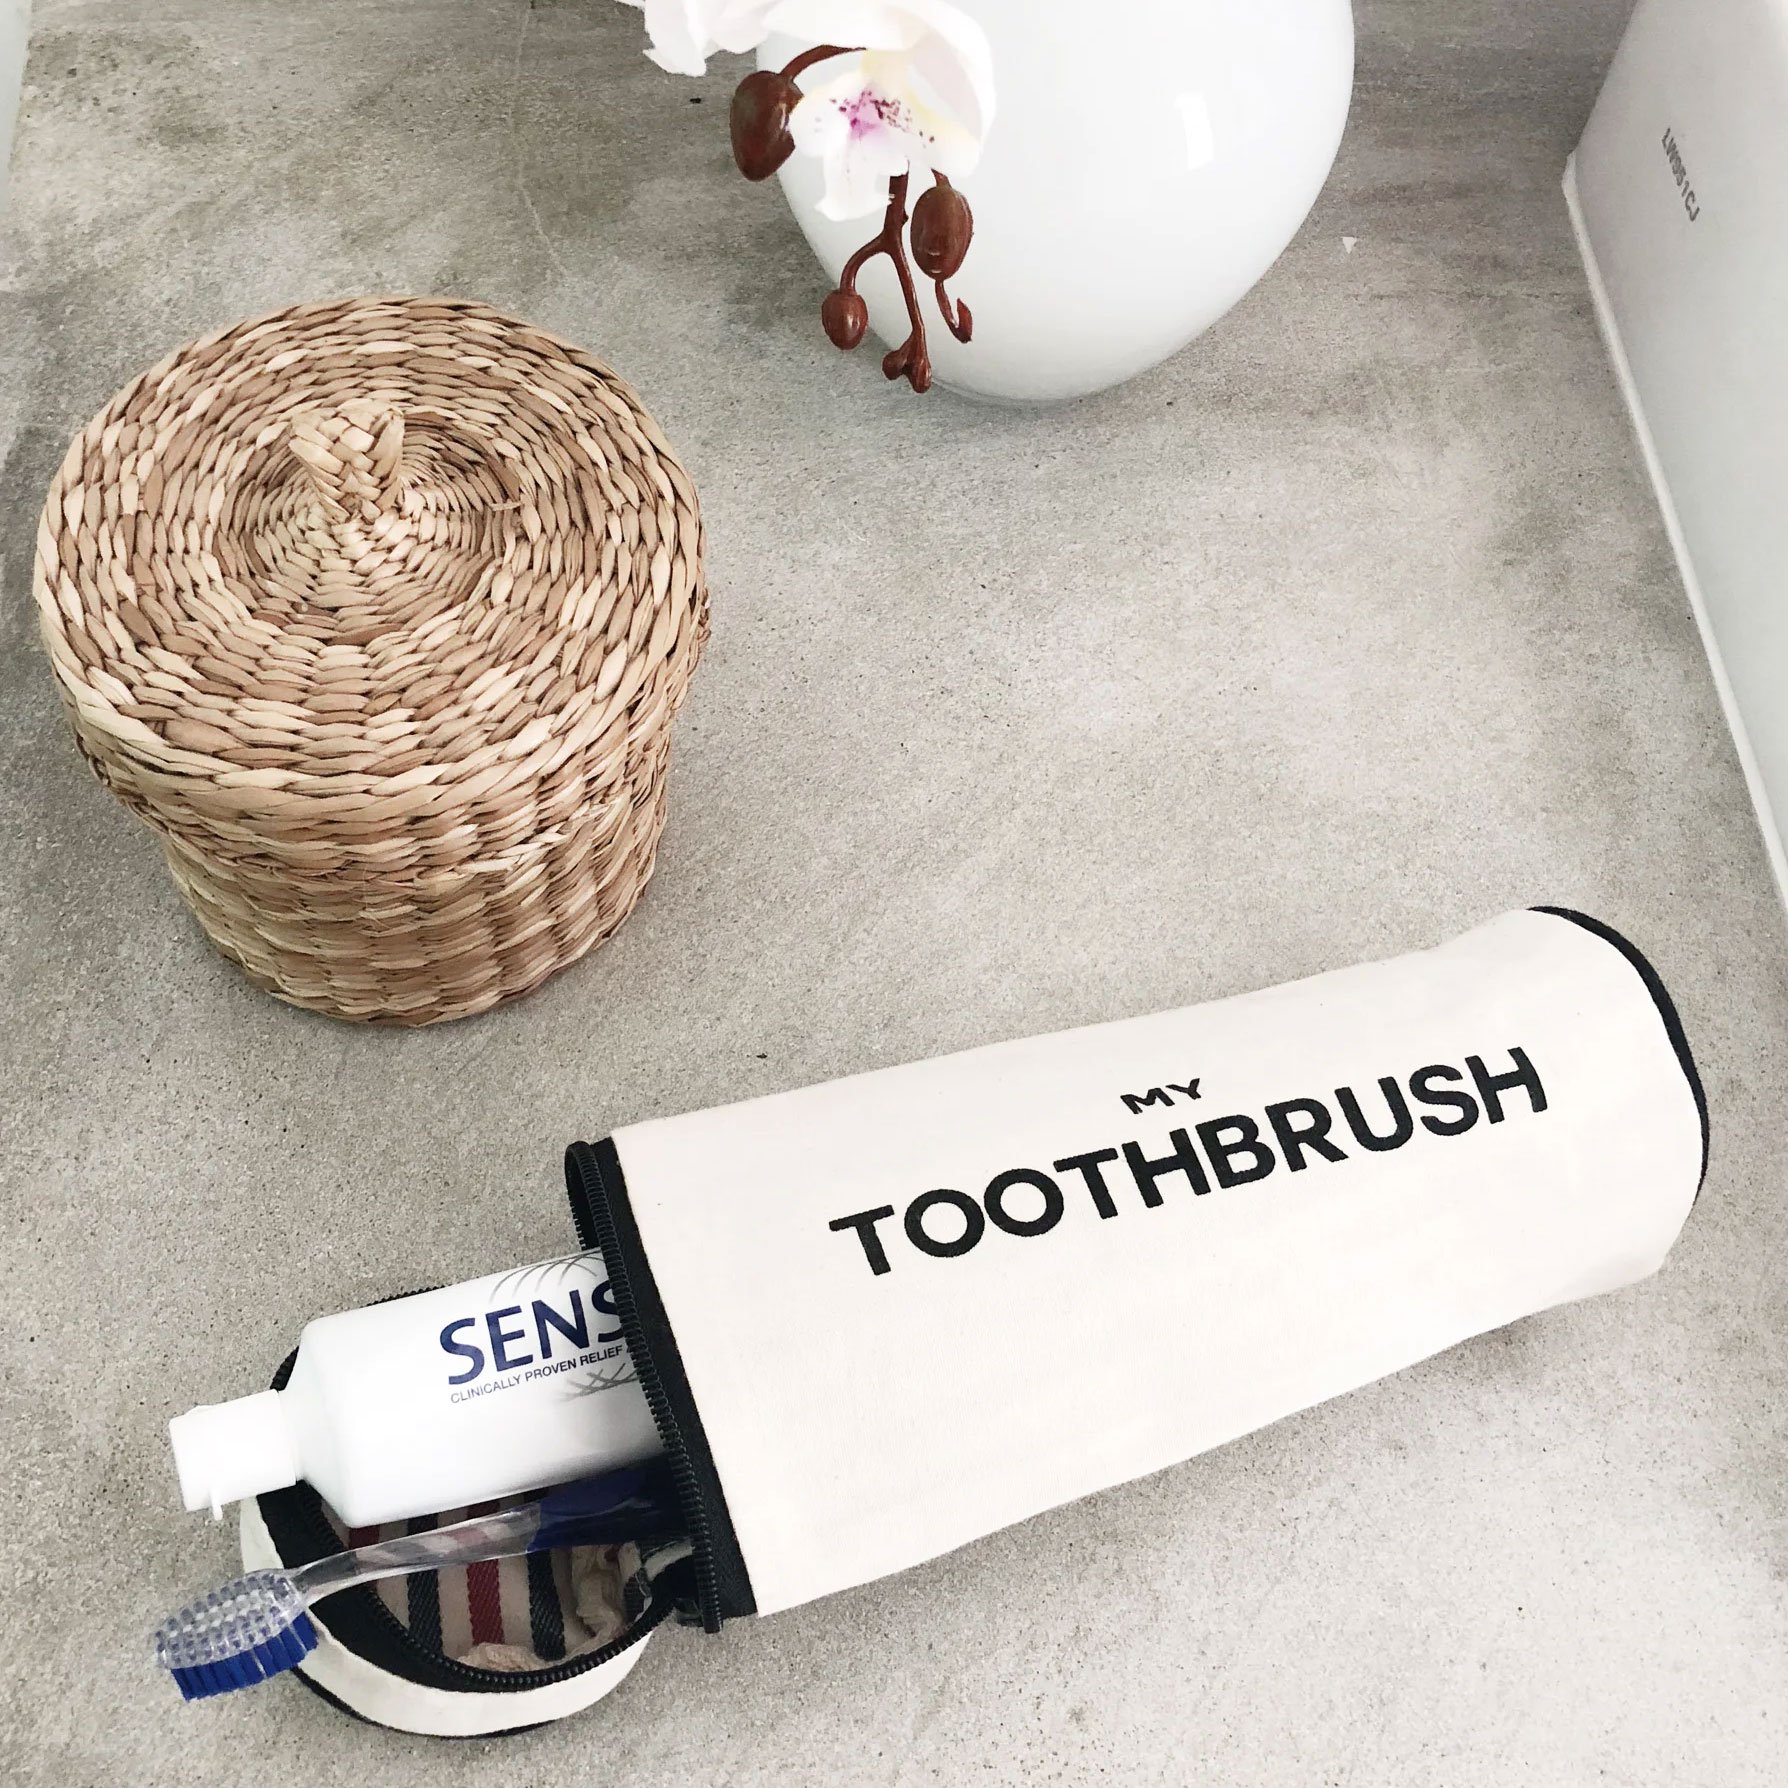 Bag all: "Etui für die Zahnbürste" 3